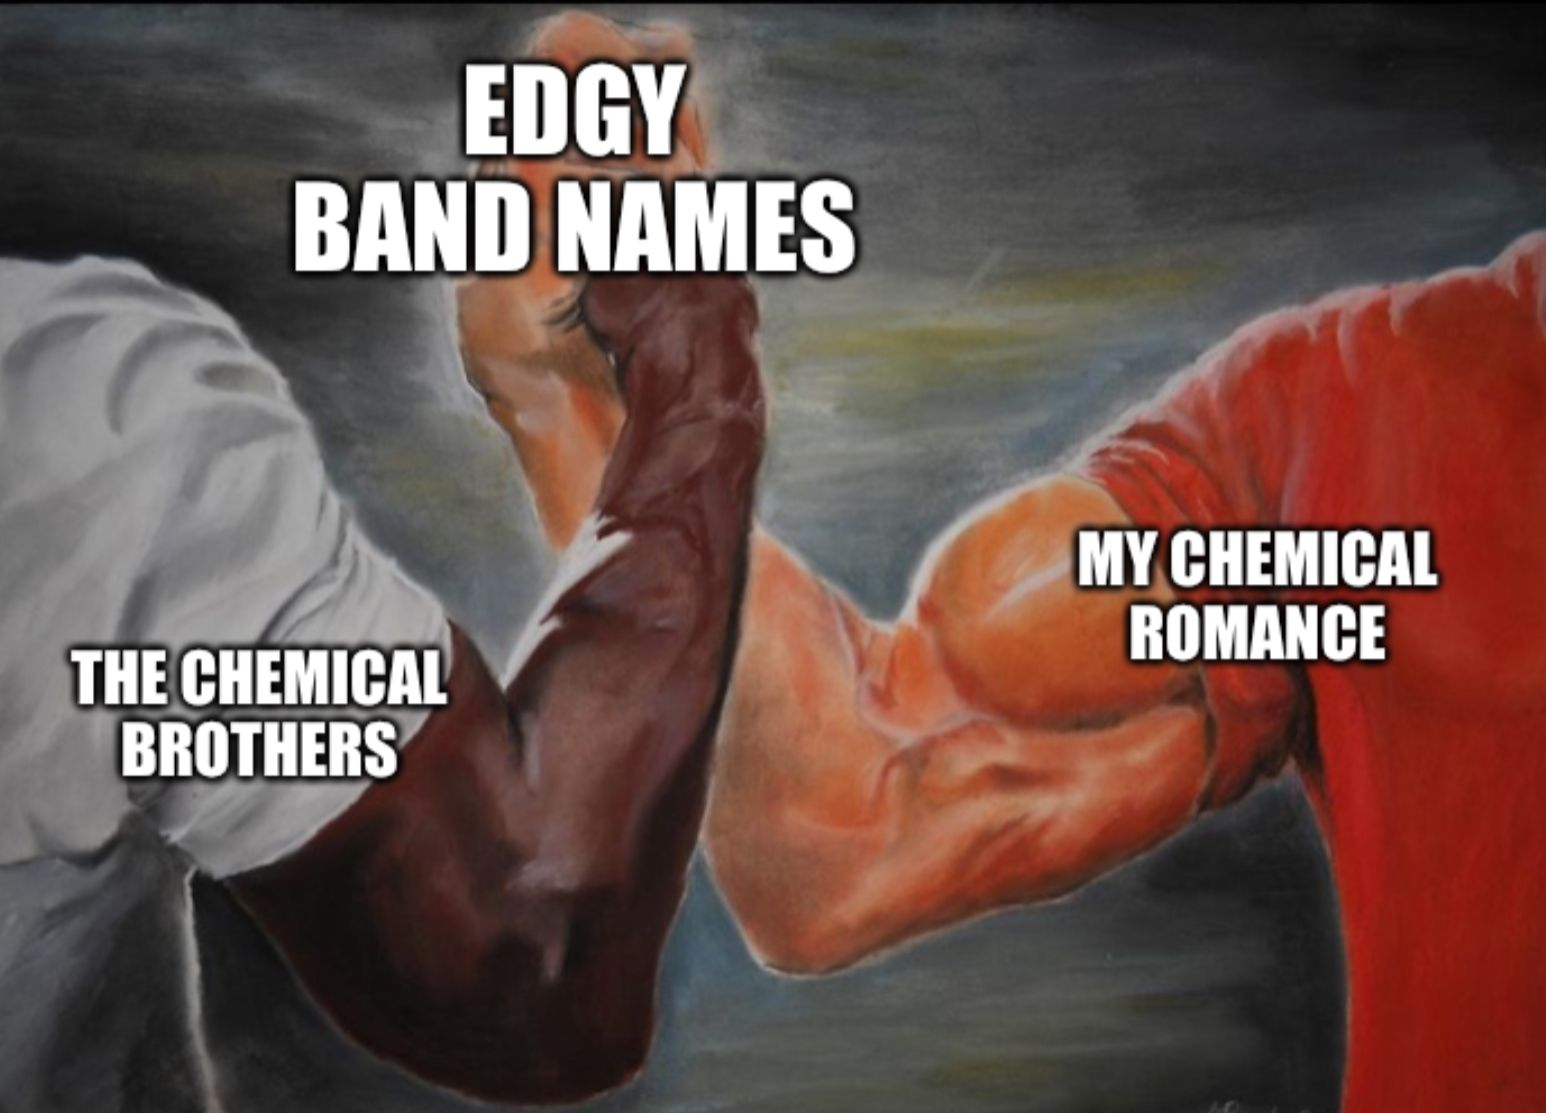 Wow much chemistry.